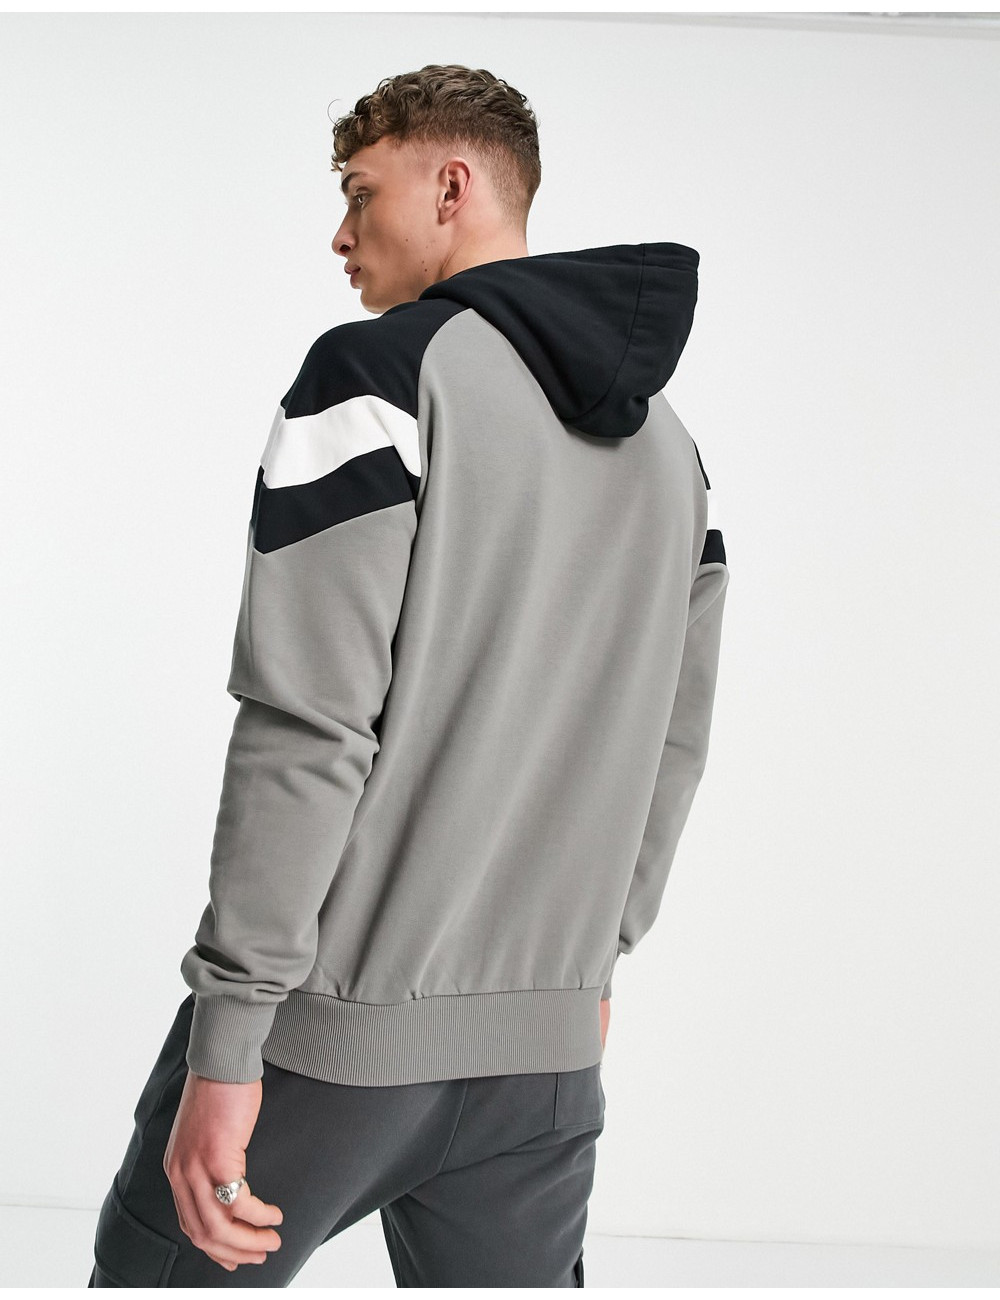 Puma Iconic Mcs hoodie in grey